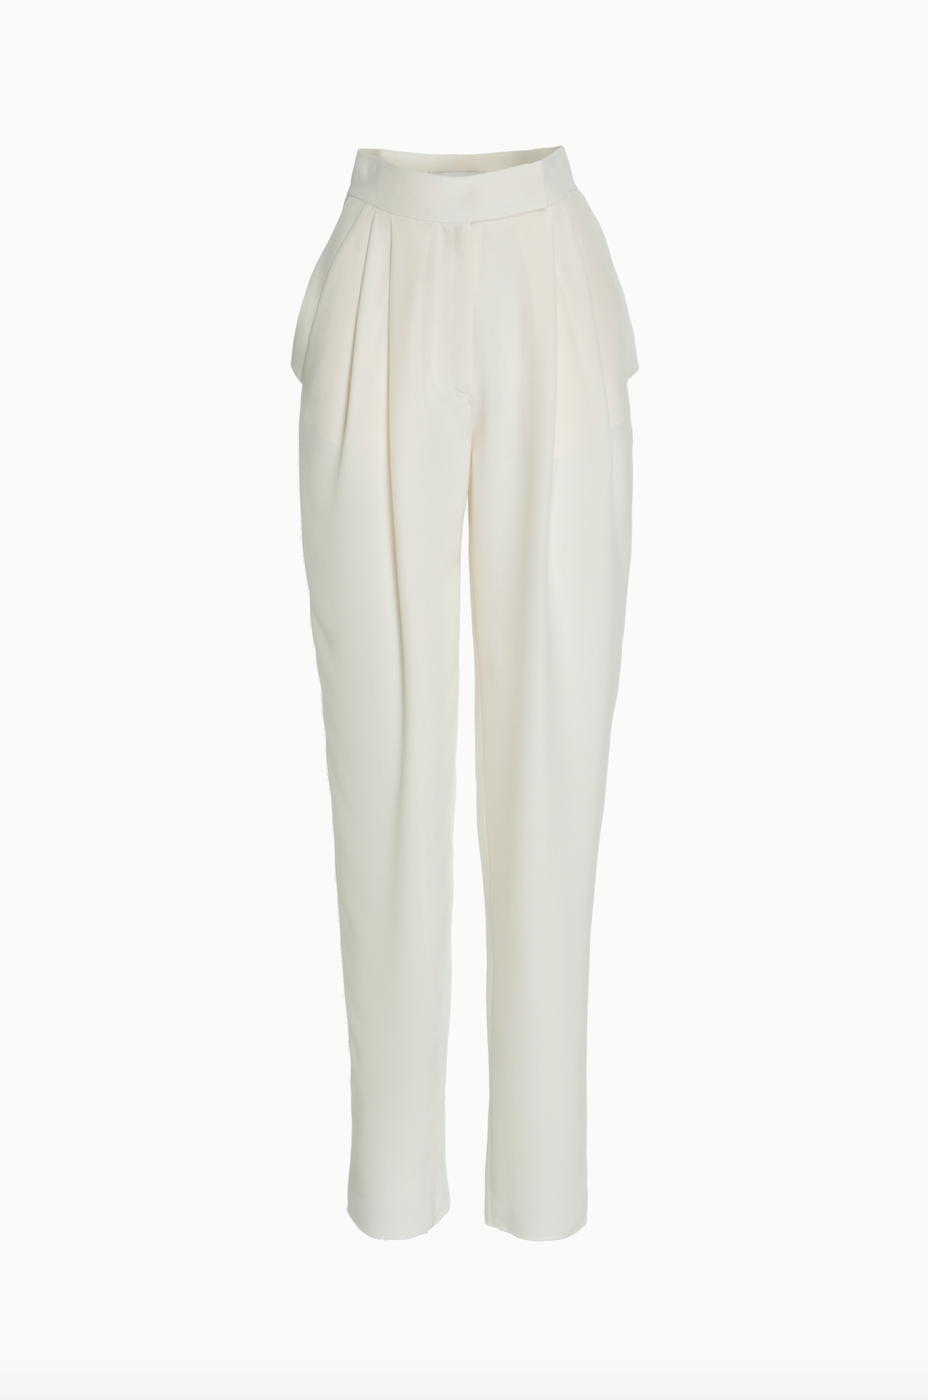 flowy trousers modest fashion kristina fidelskaya white feminine silhouette